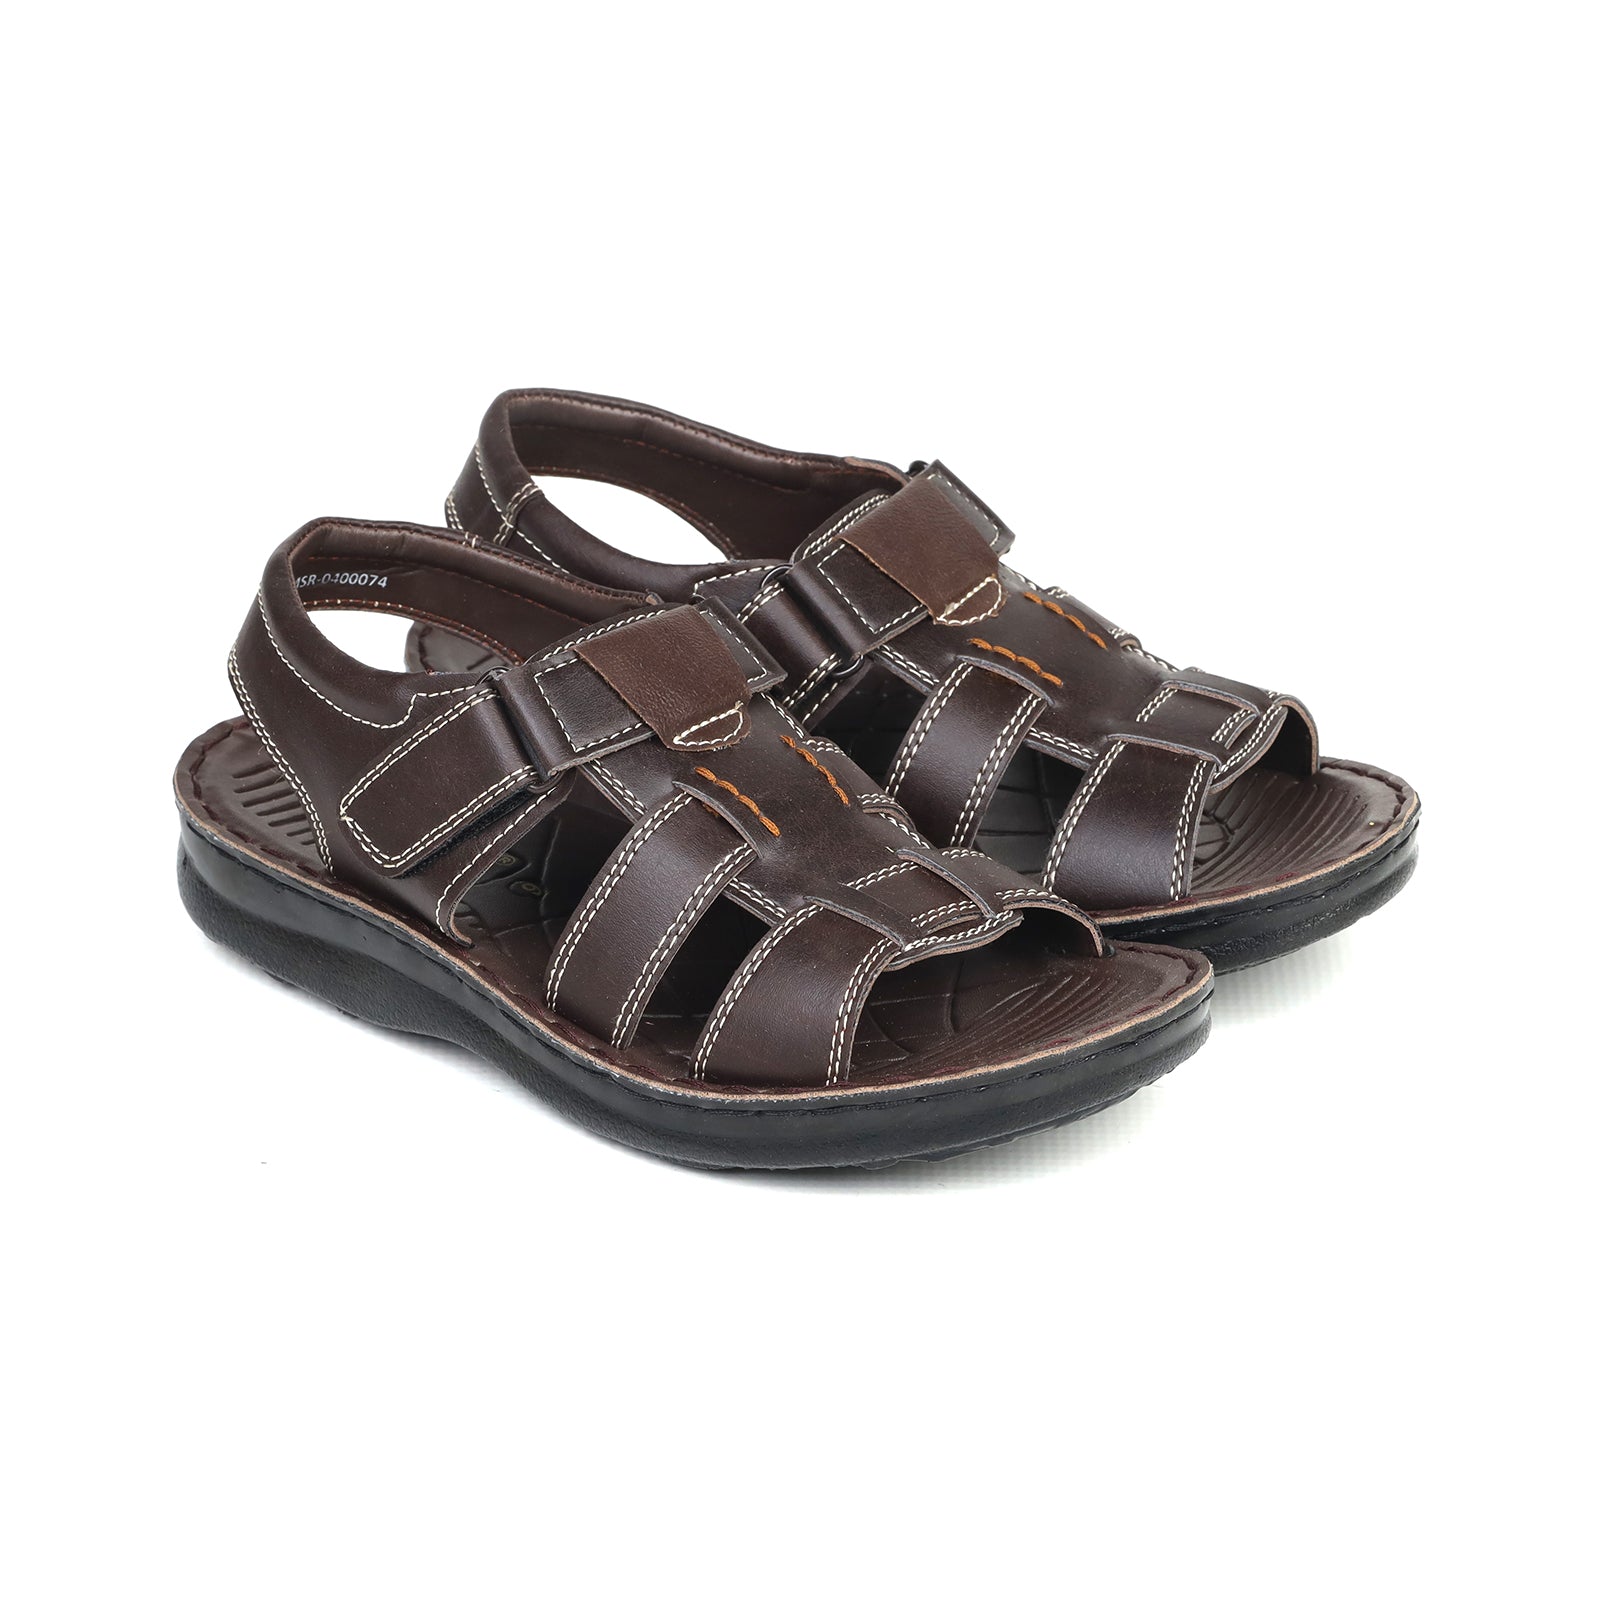 Buy Flat Sandals For Women online | Lazada.com.ph